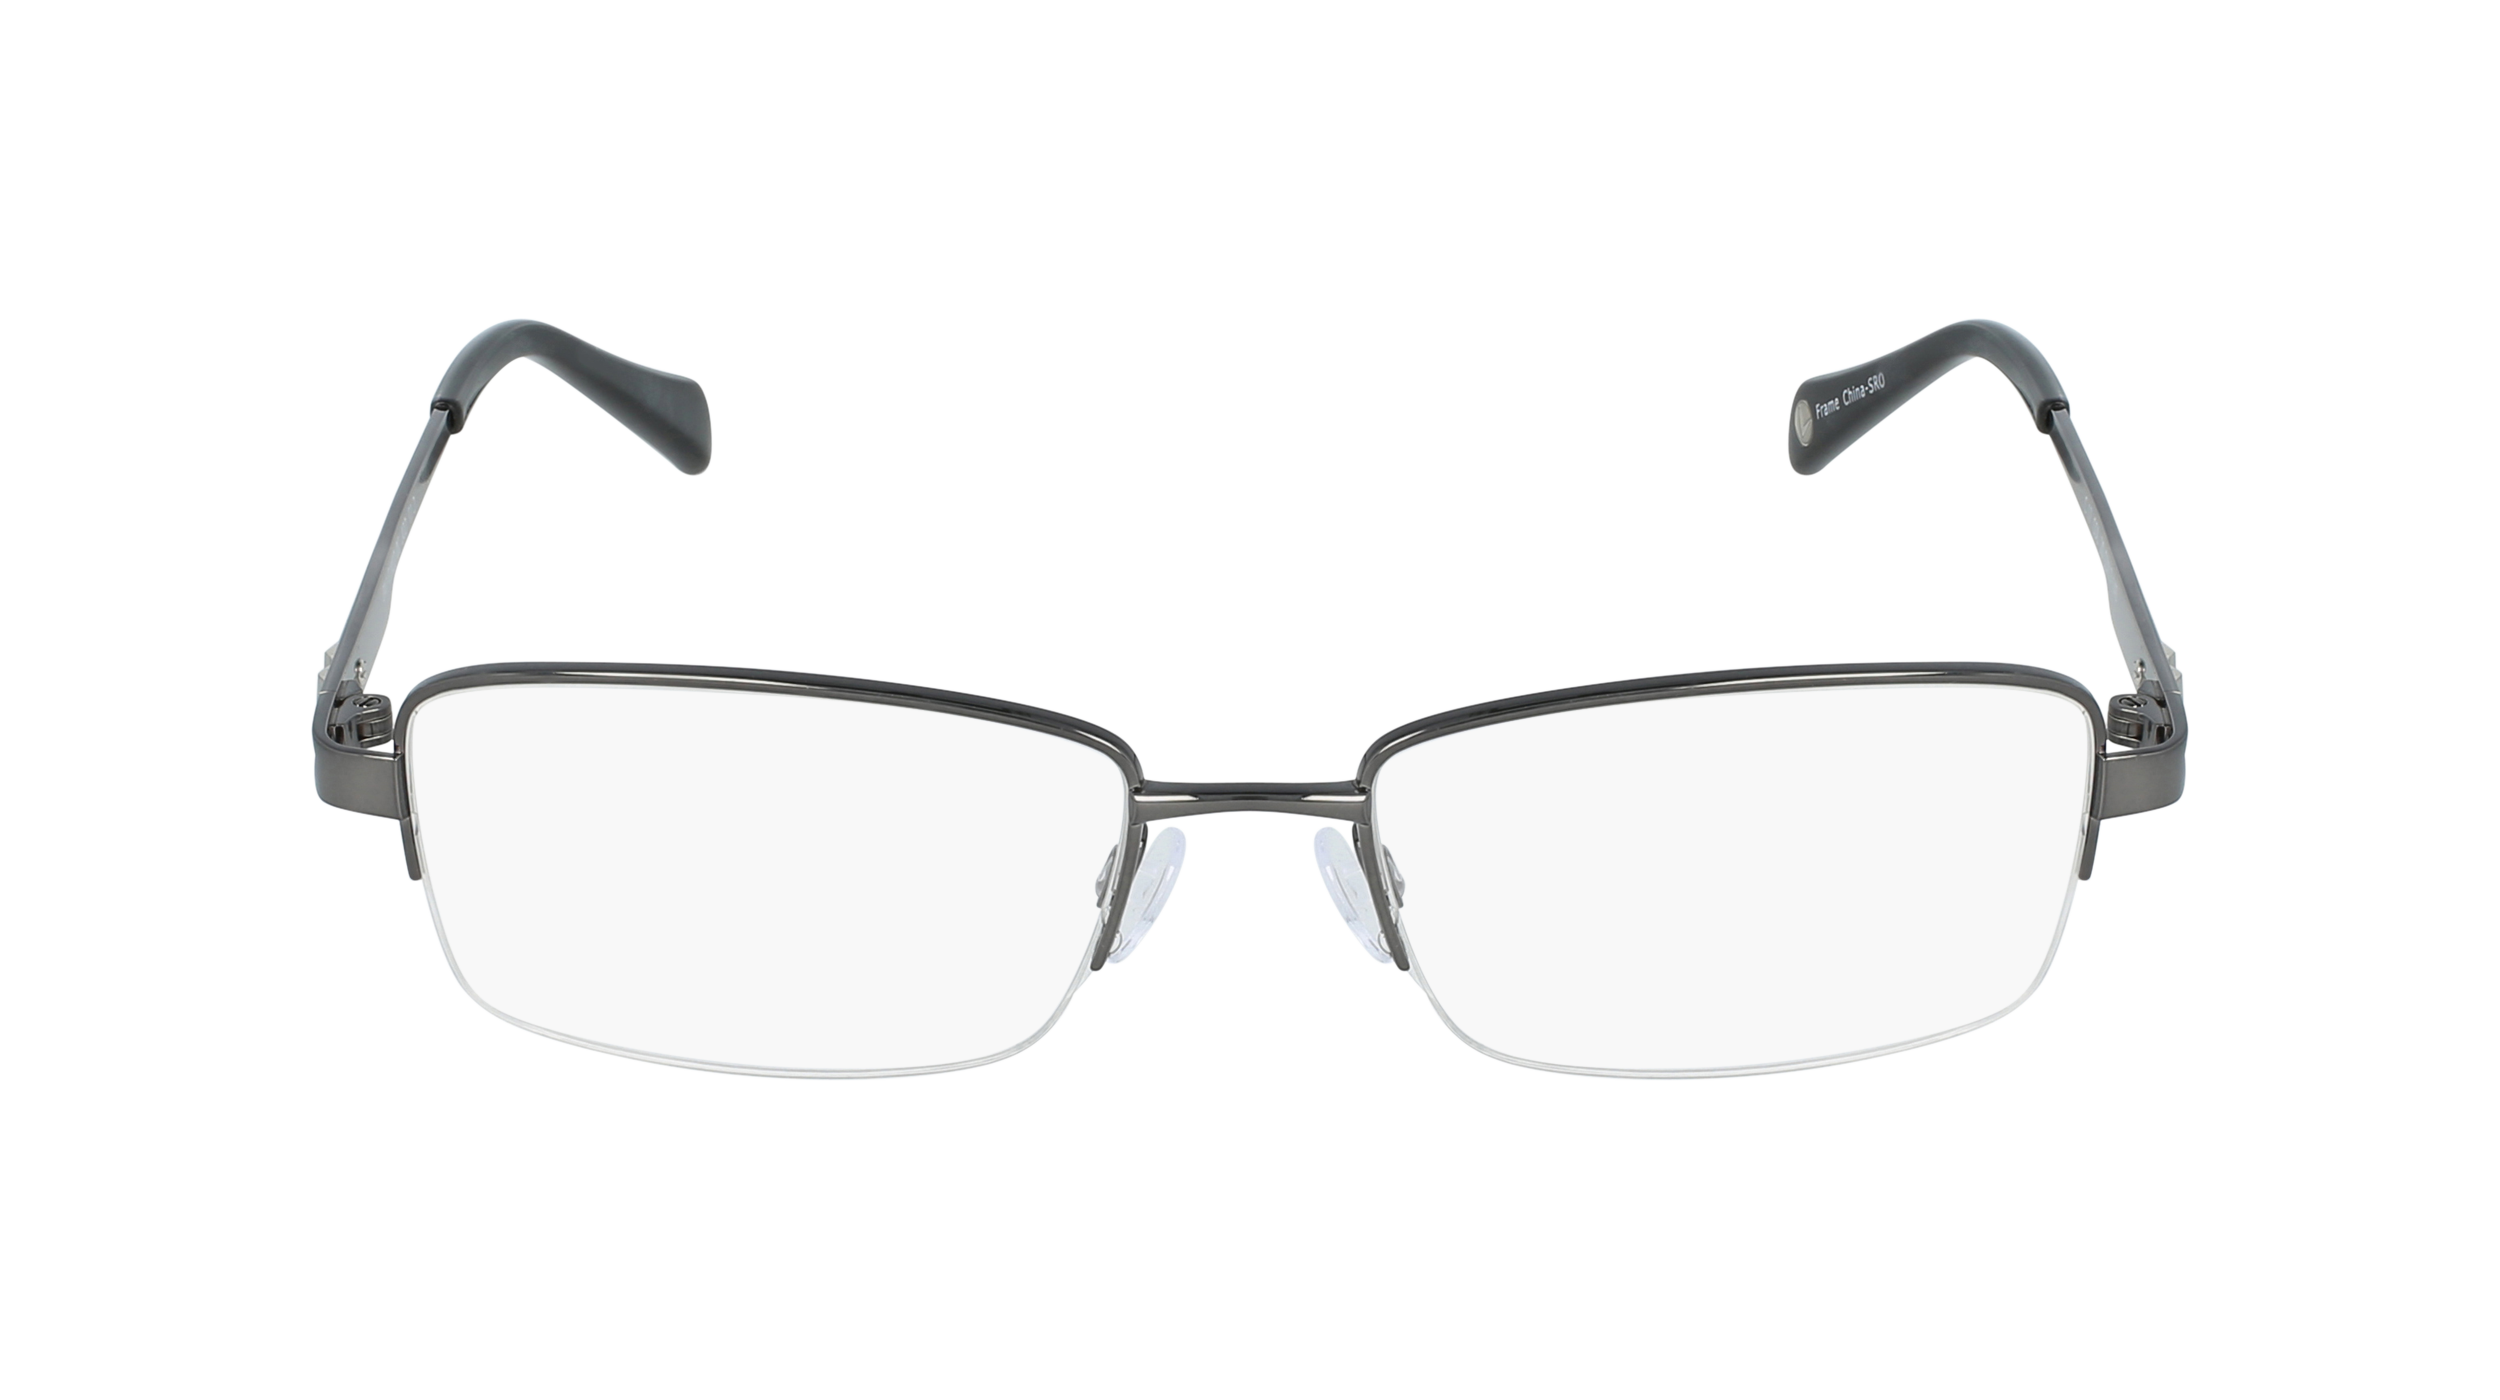 Callaway C 17 Gunmetal Men's Eyeglasses | JCPenney Optical